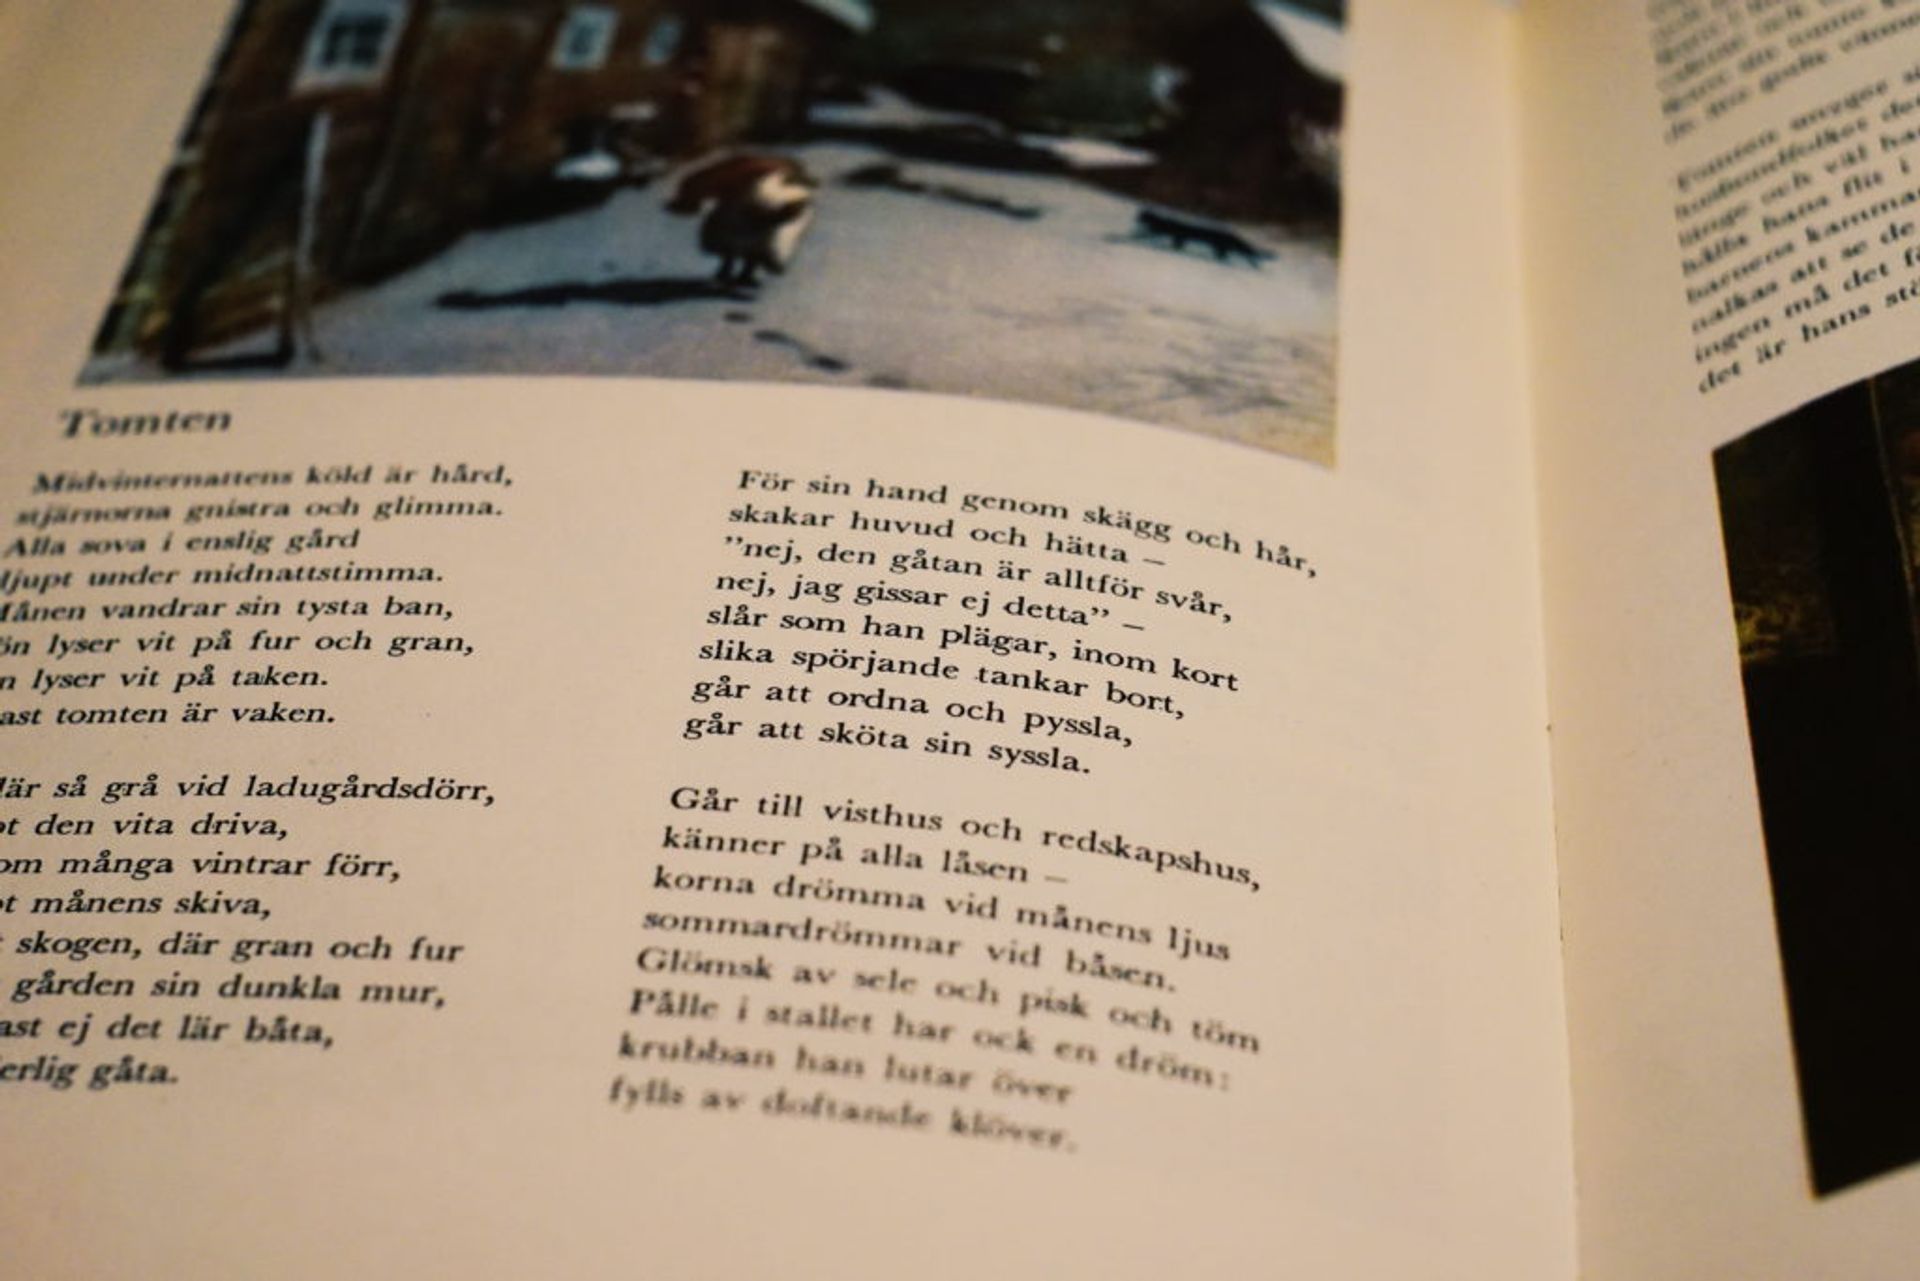 Close-up of a book written in Swedish.